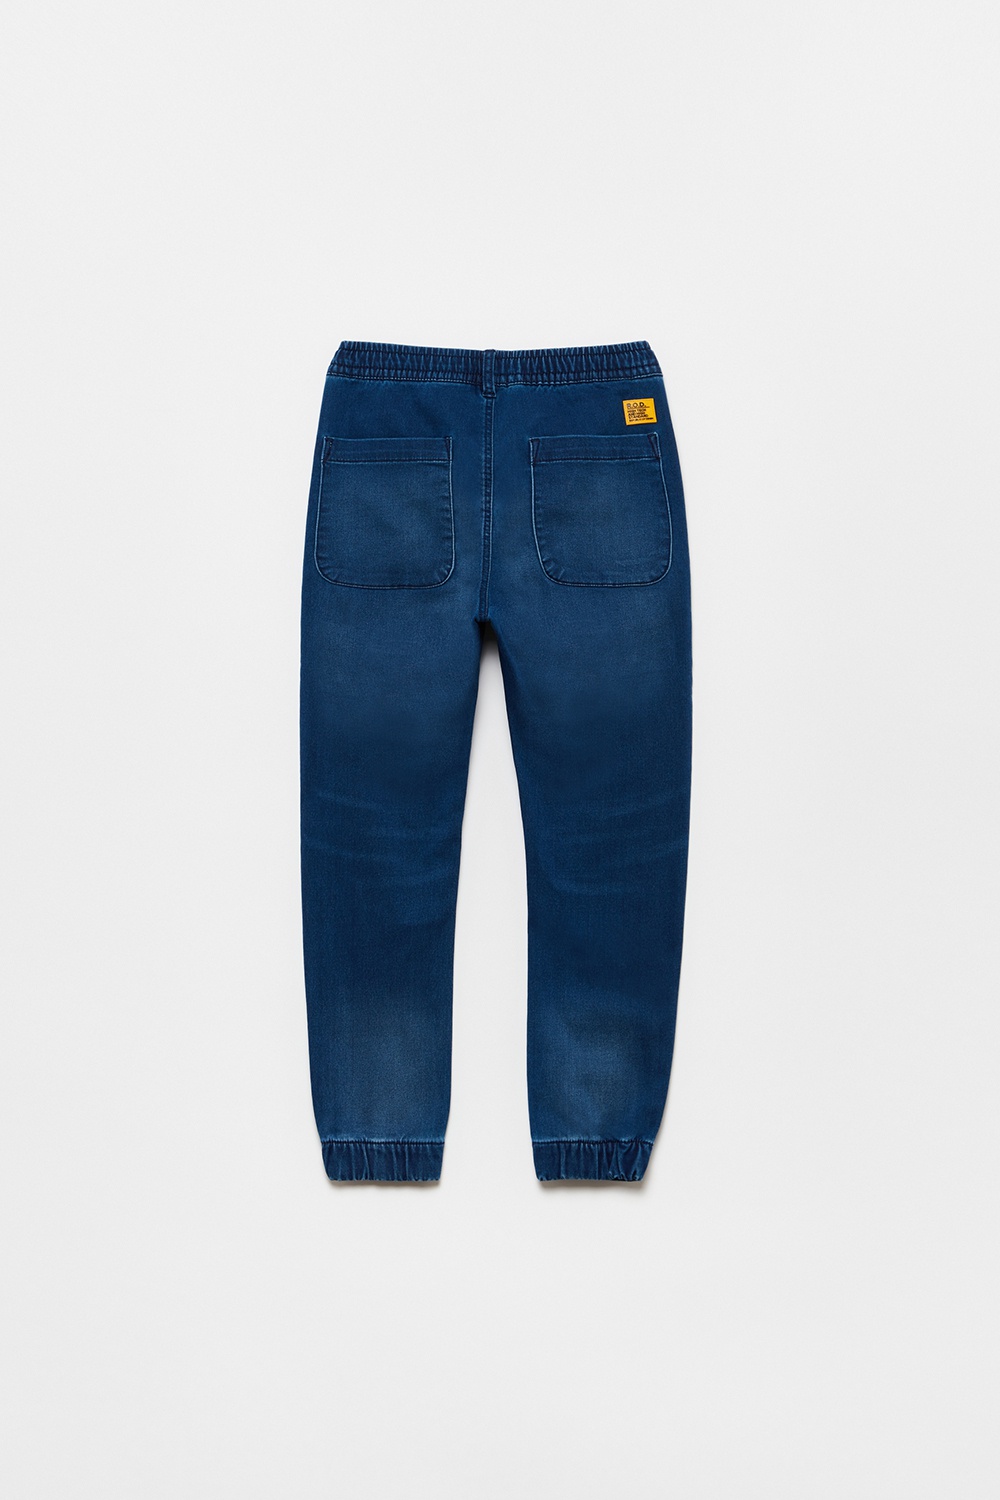 OVS Junior Boys Blue Denim Jeans